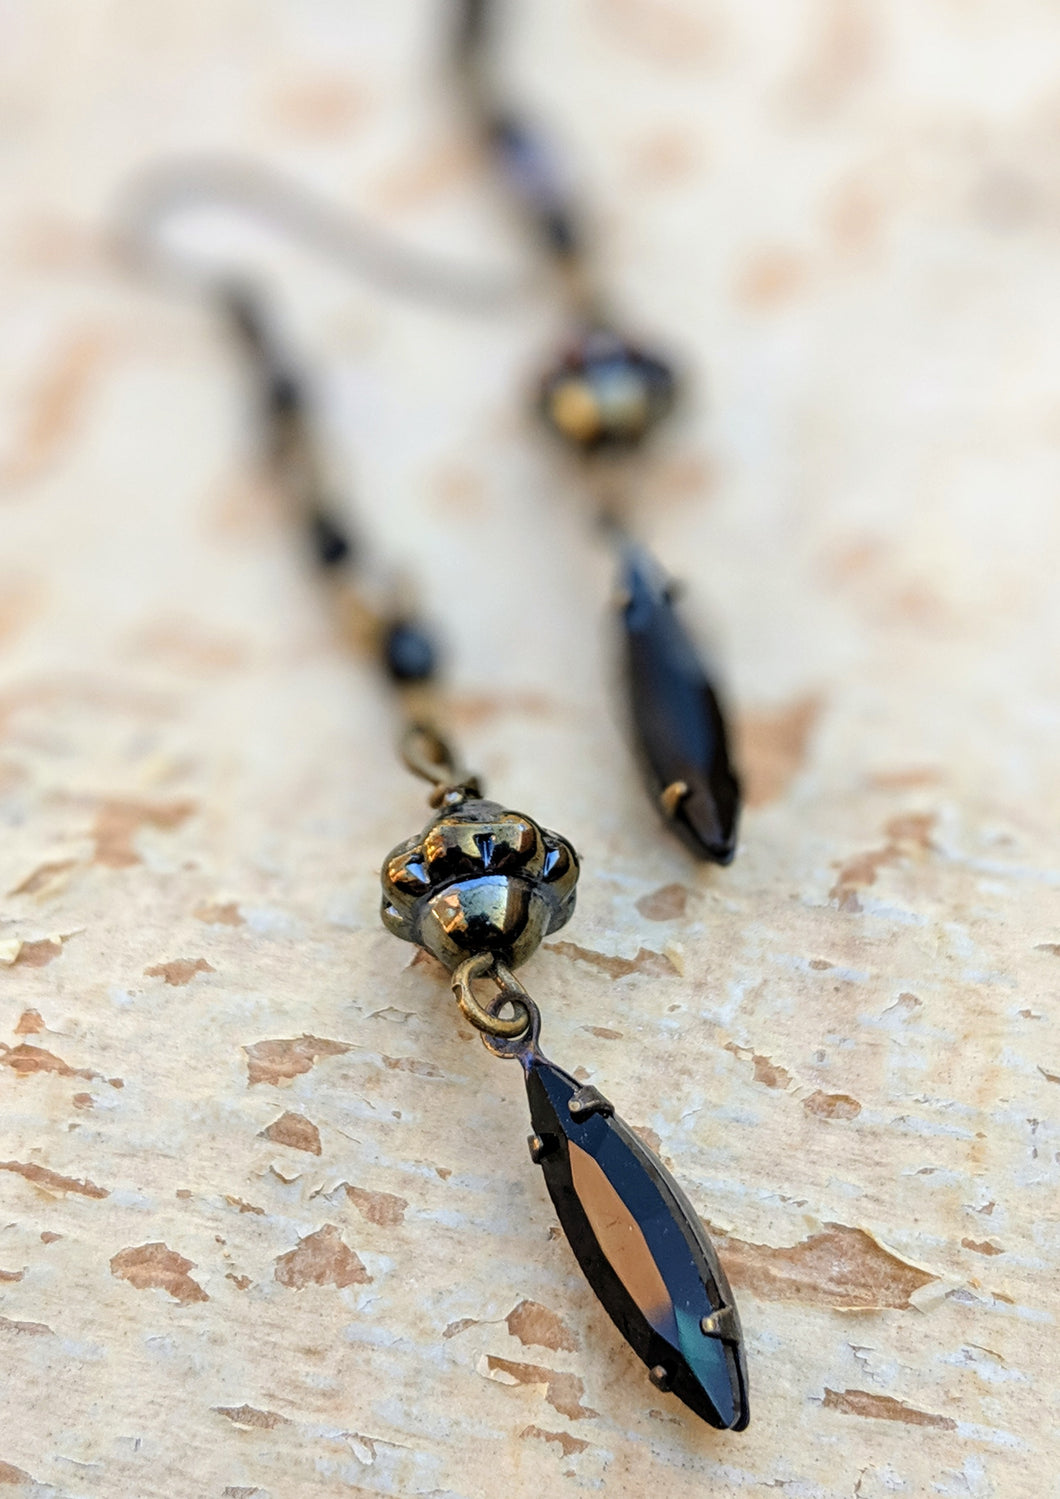 Vintage Black Rhinestone Dangle Earrings - Minxes' Trinkets